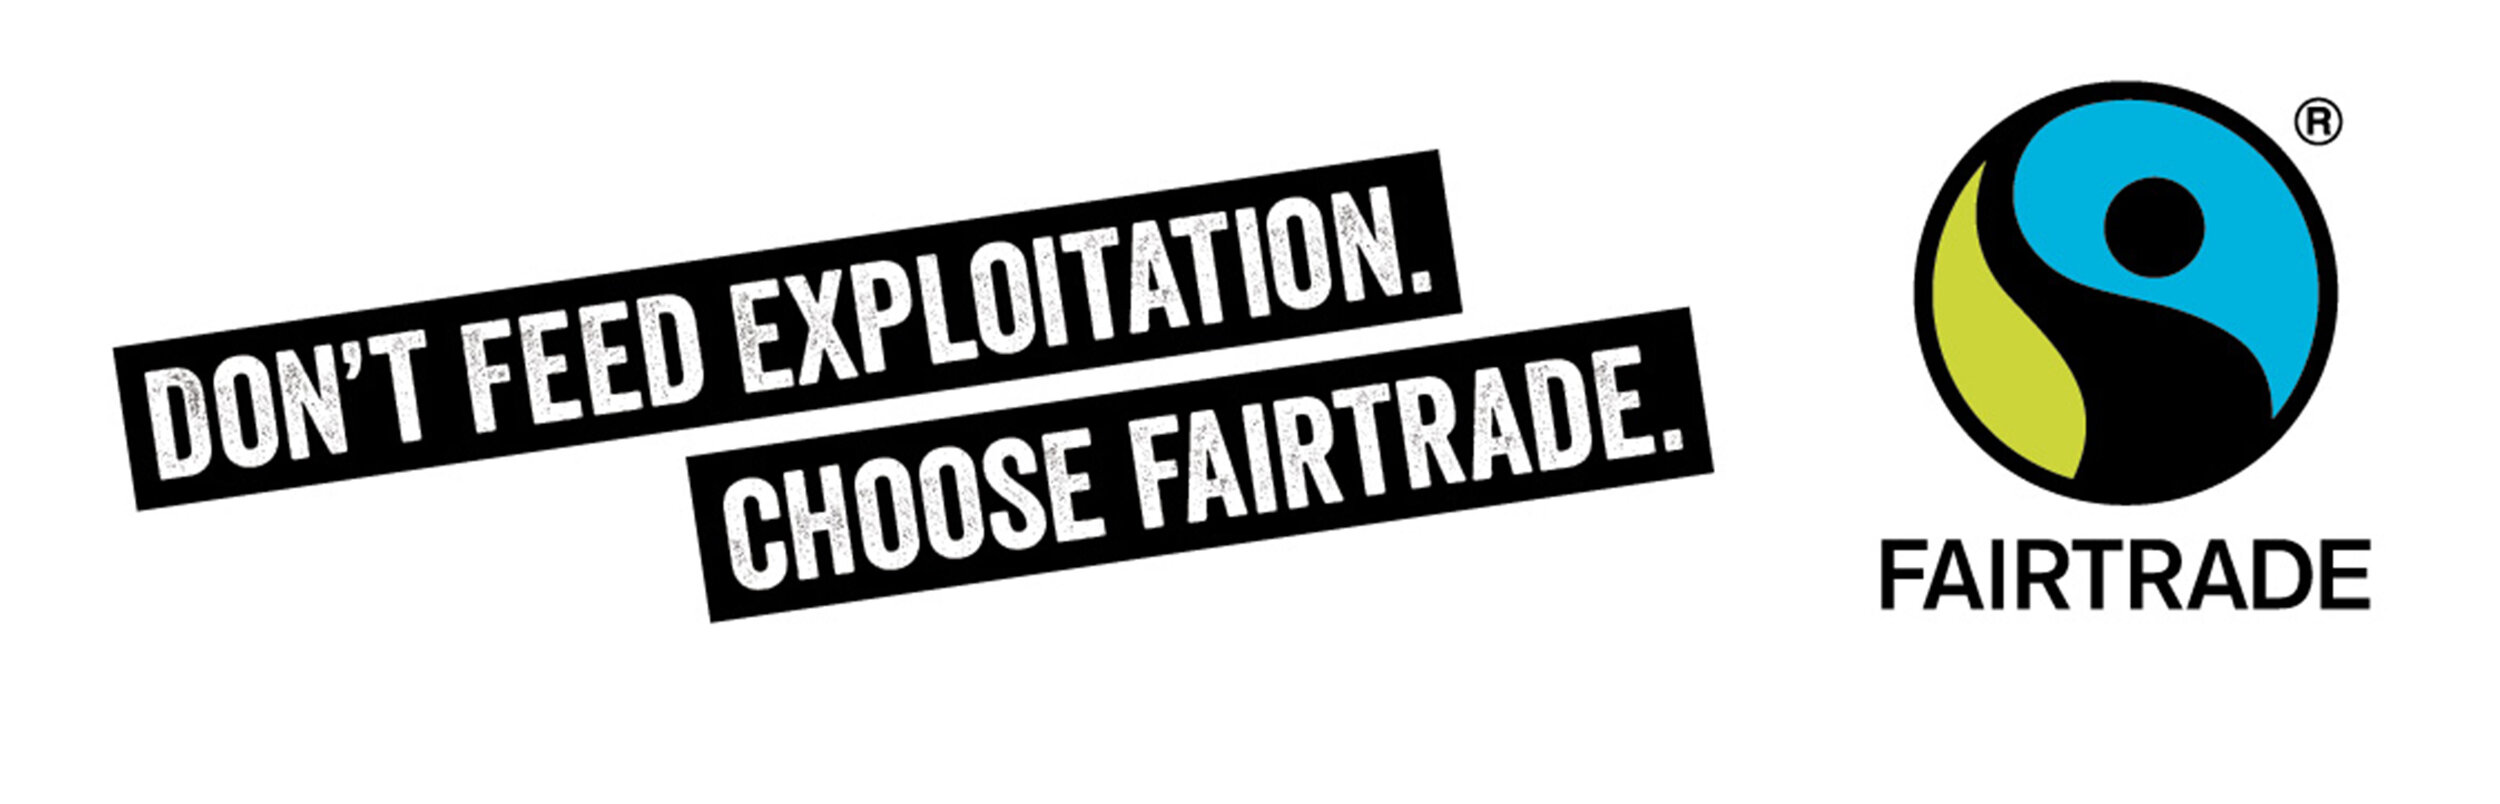 Positive Fairtrade Strapline.jpg